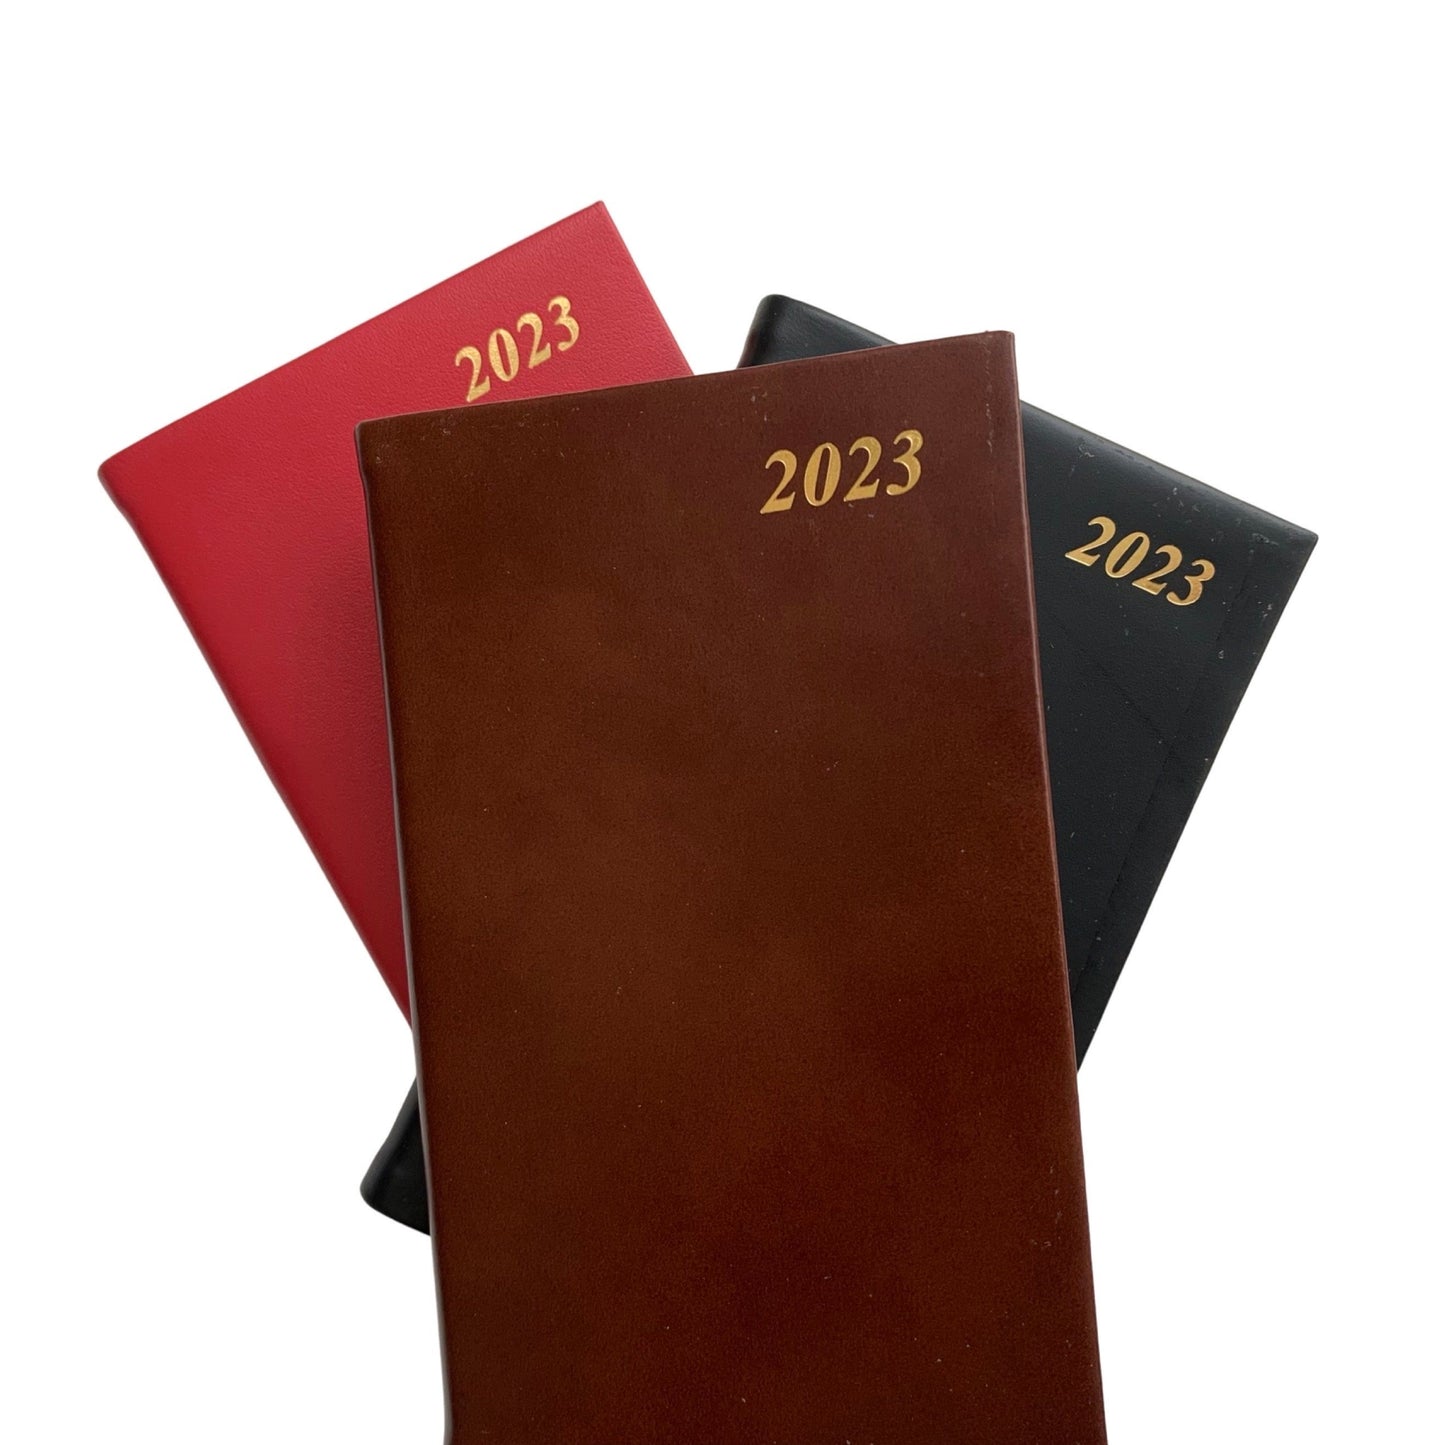 YEAR 2023 CALF Leather Pocket Agenda Book | 5 x 3" | D753C